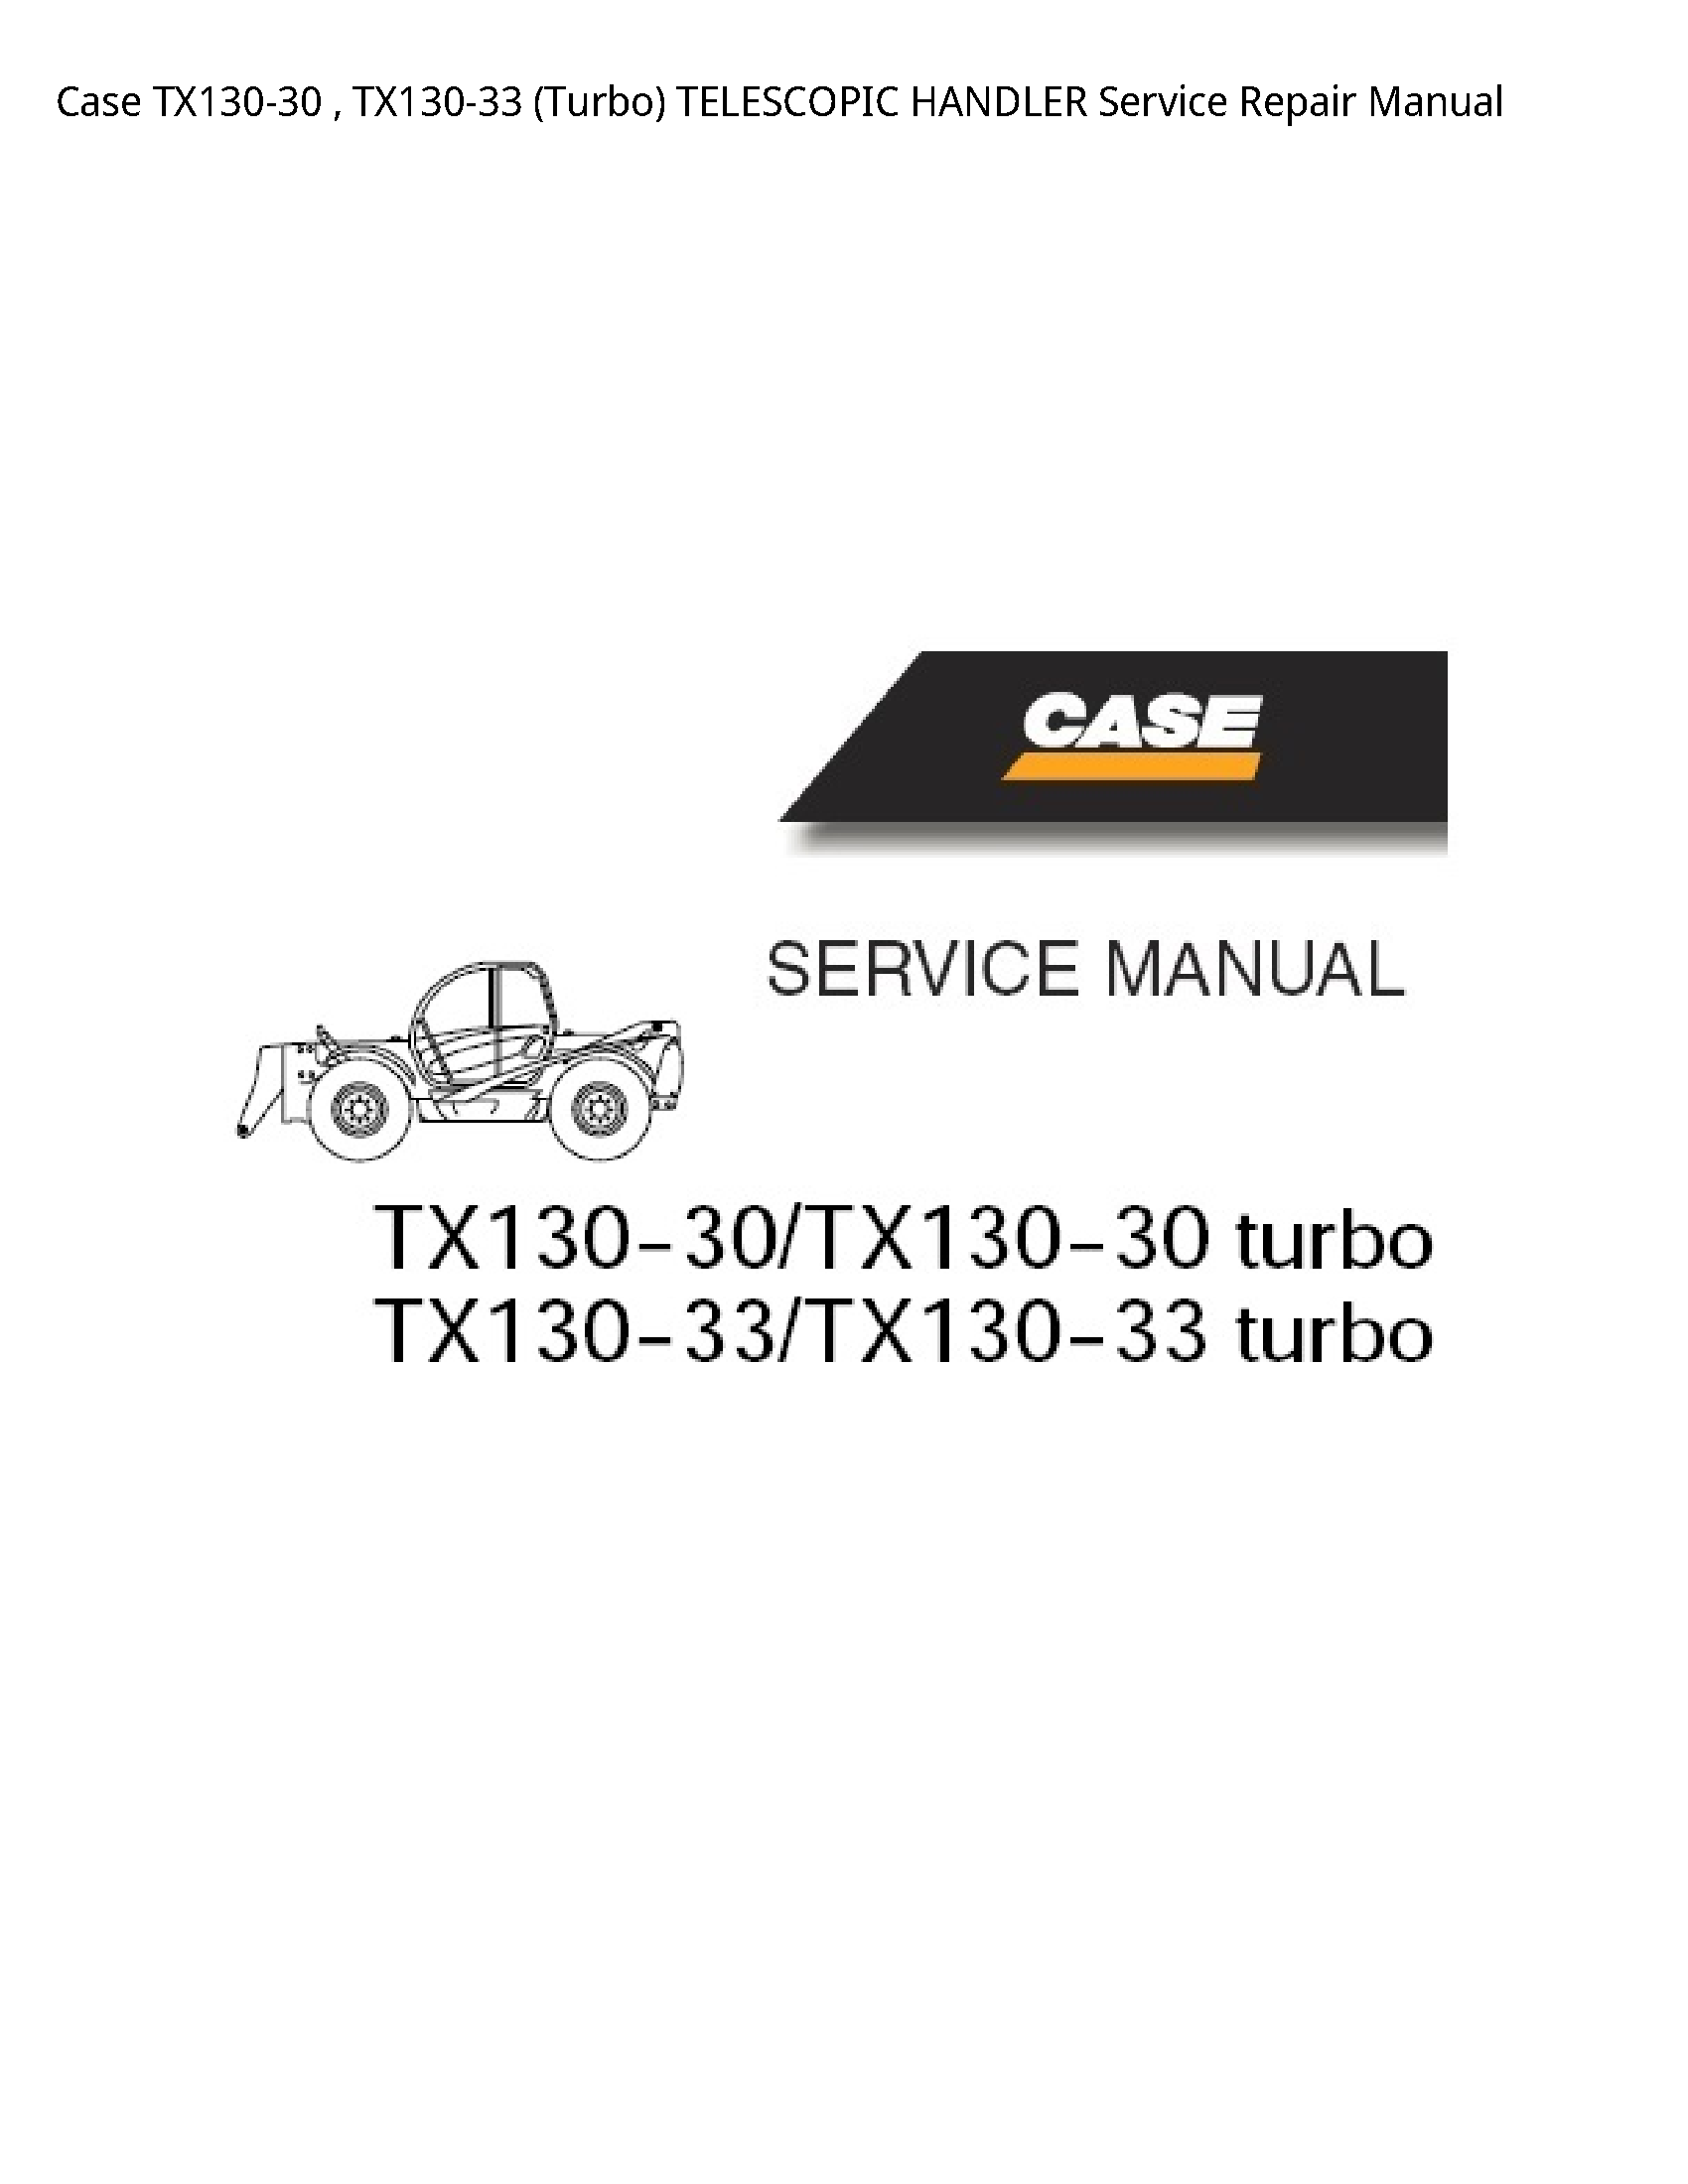 Case/Case IH TX130-30 (Turbo) TELESCOPIC HANDLER manual